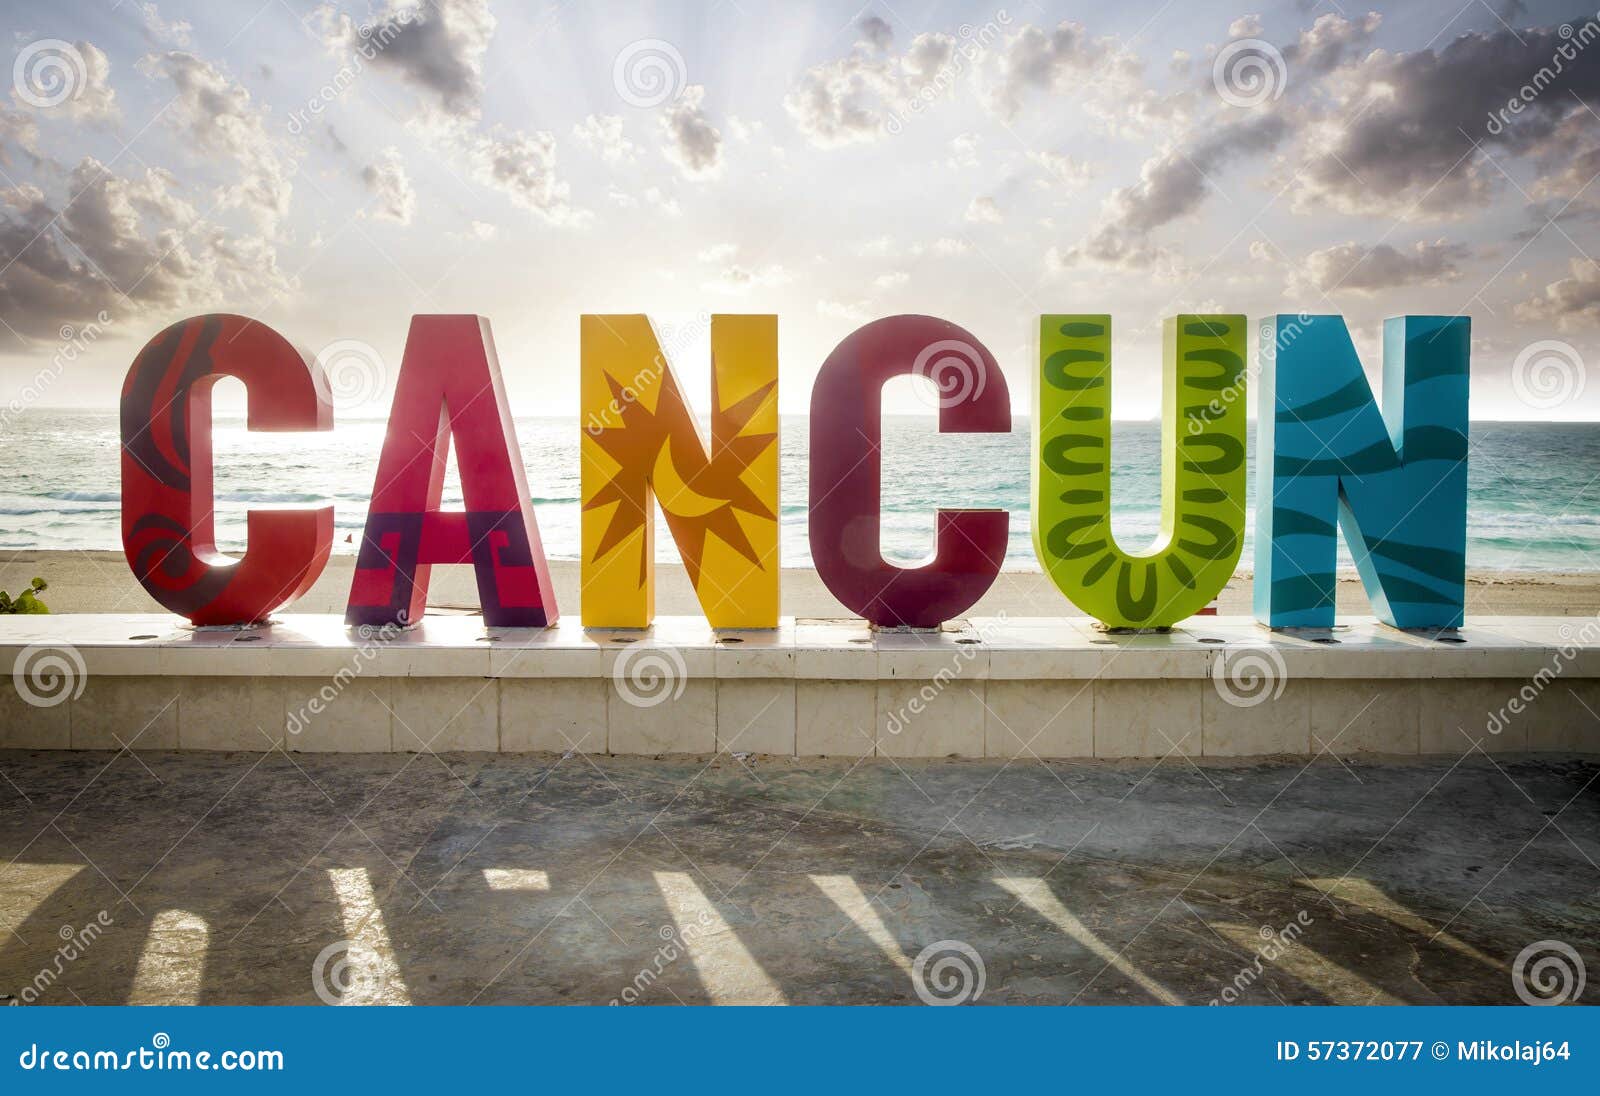 cancun, mexico